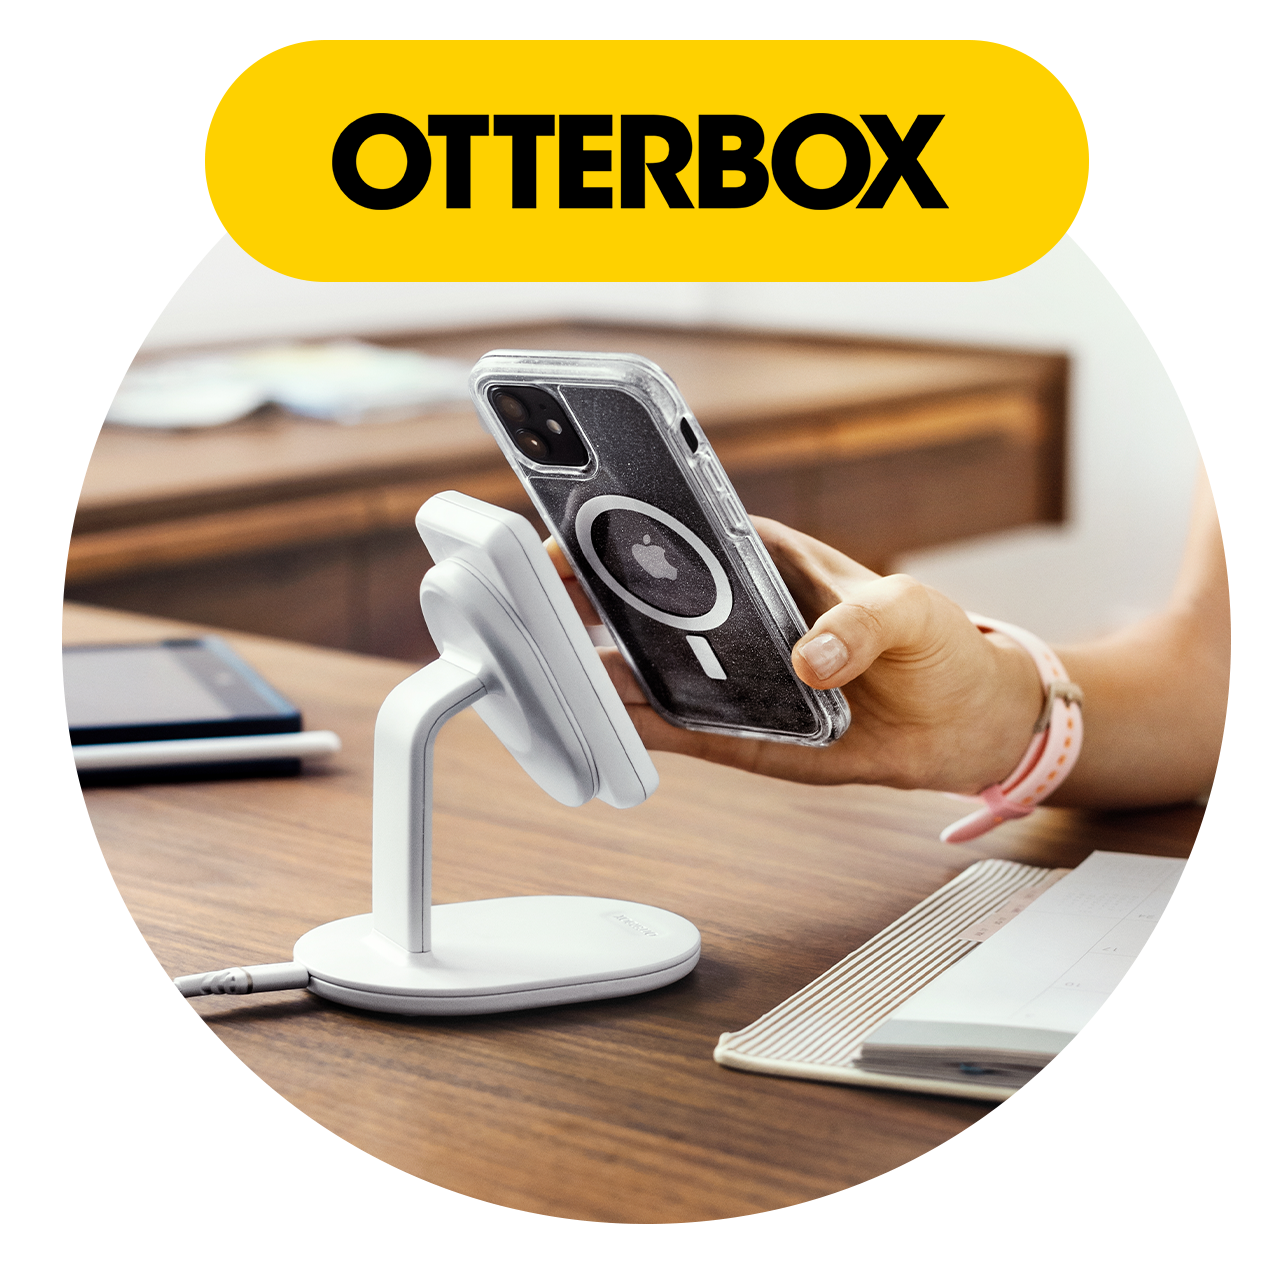 otterbox logo